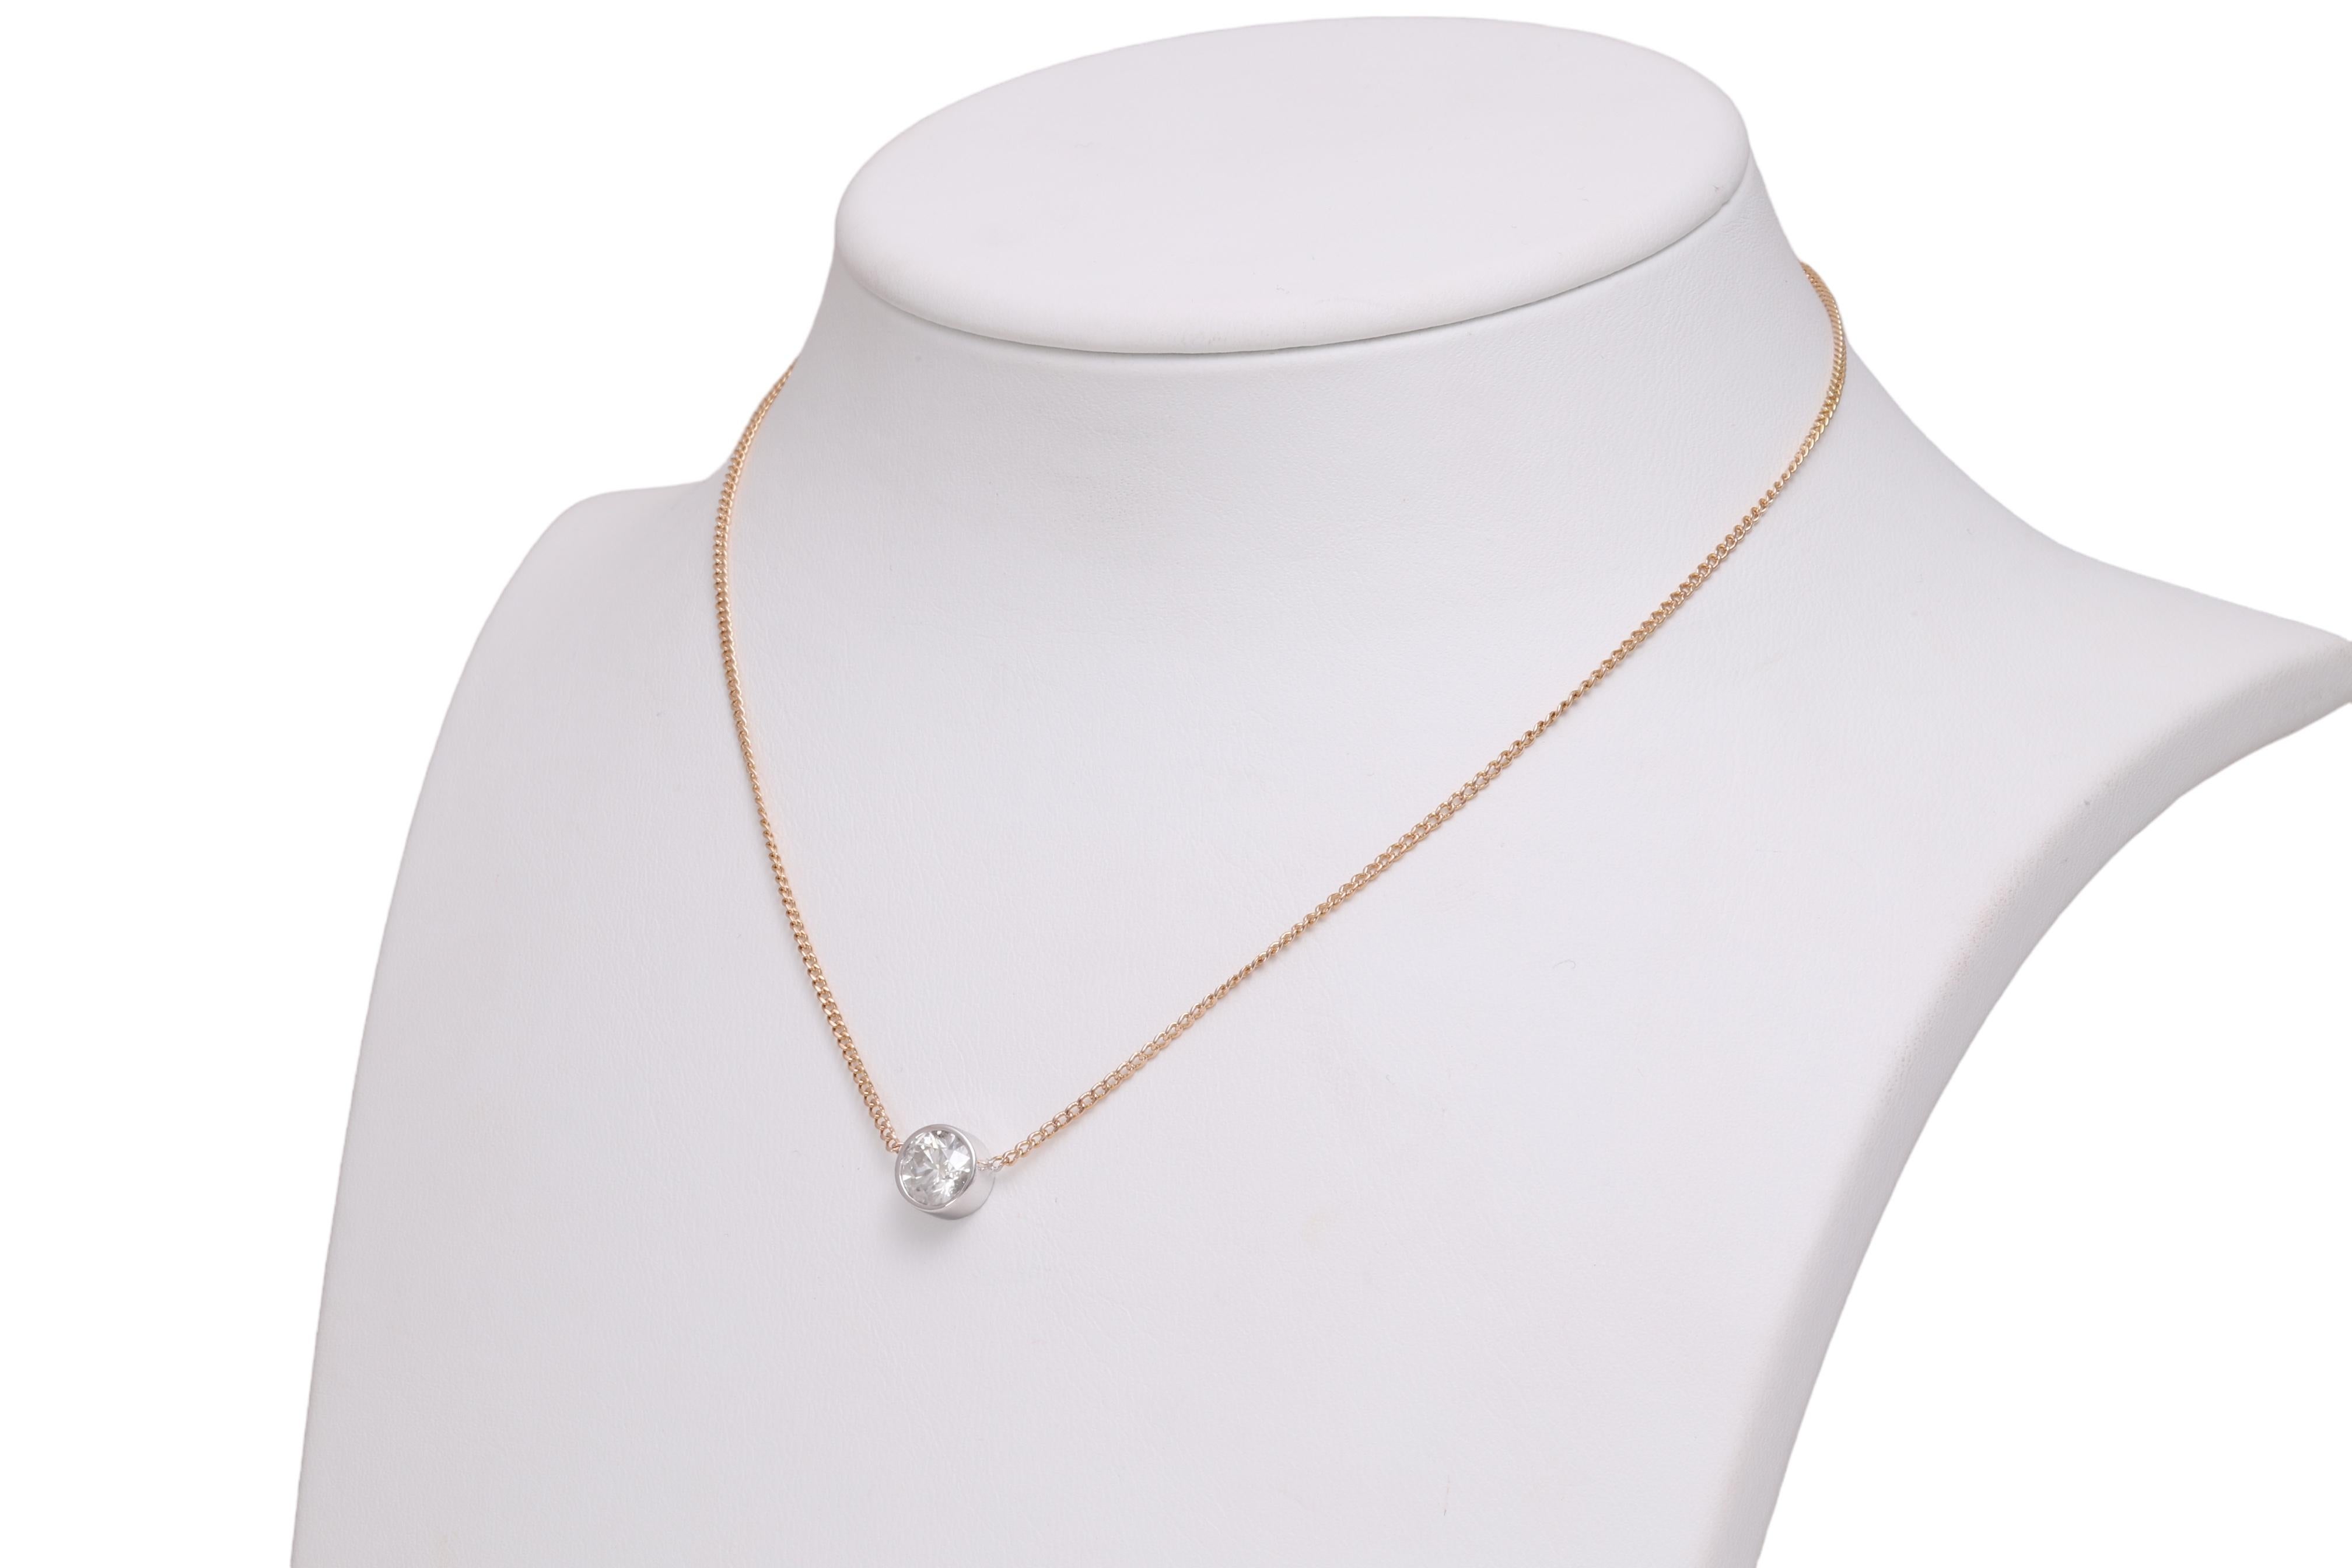 Brilliant Cut IGi Certified 18 kt. Gold Diamond Pendant Choker Necklace with 1.06 ct. Diamond For Sale